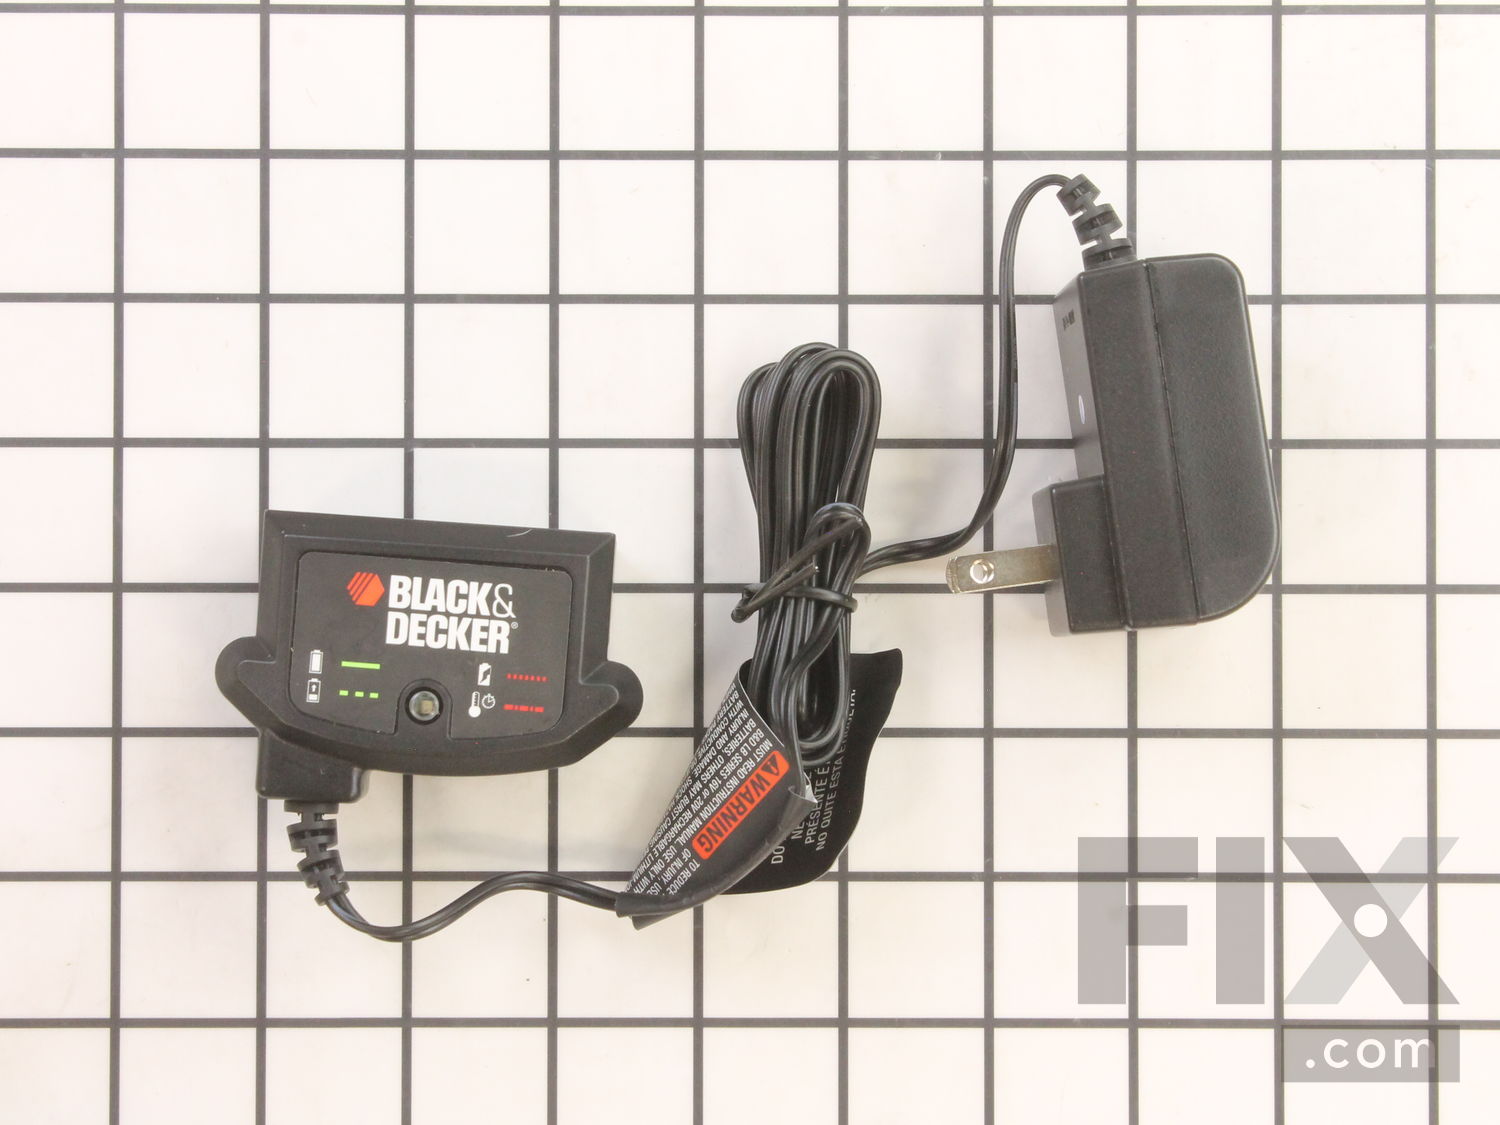 BLACK+DECKER 20V Max Pressure Washer (BCPW350C1) for sale online